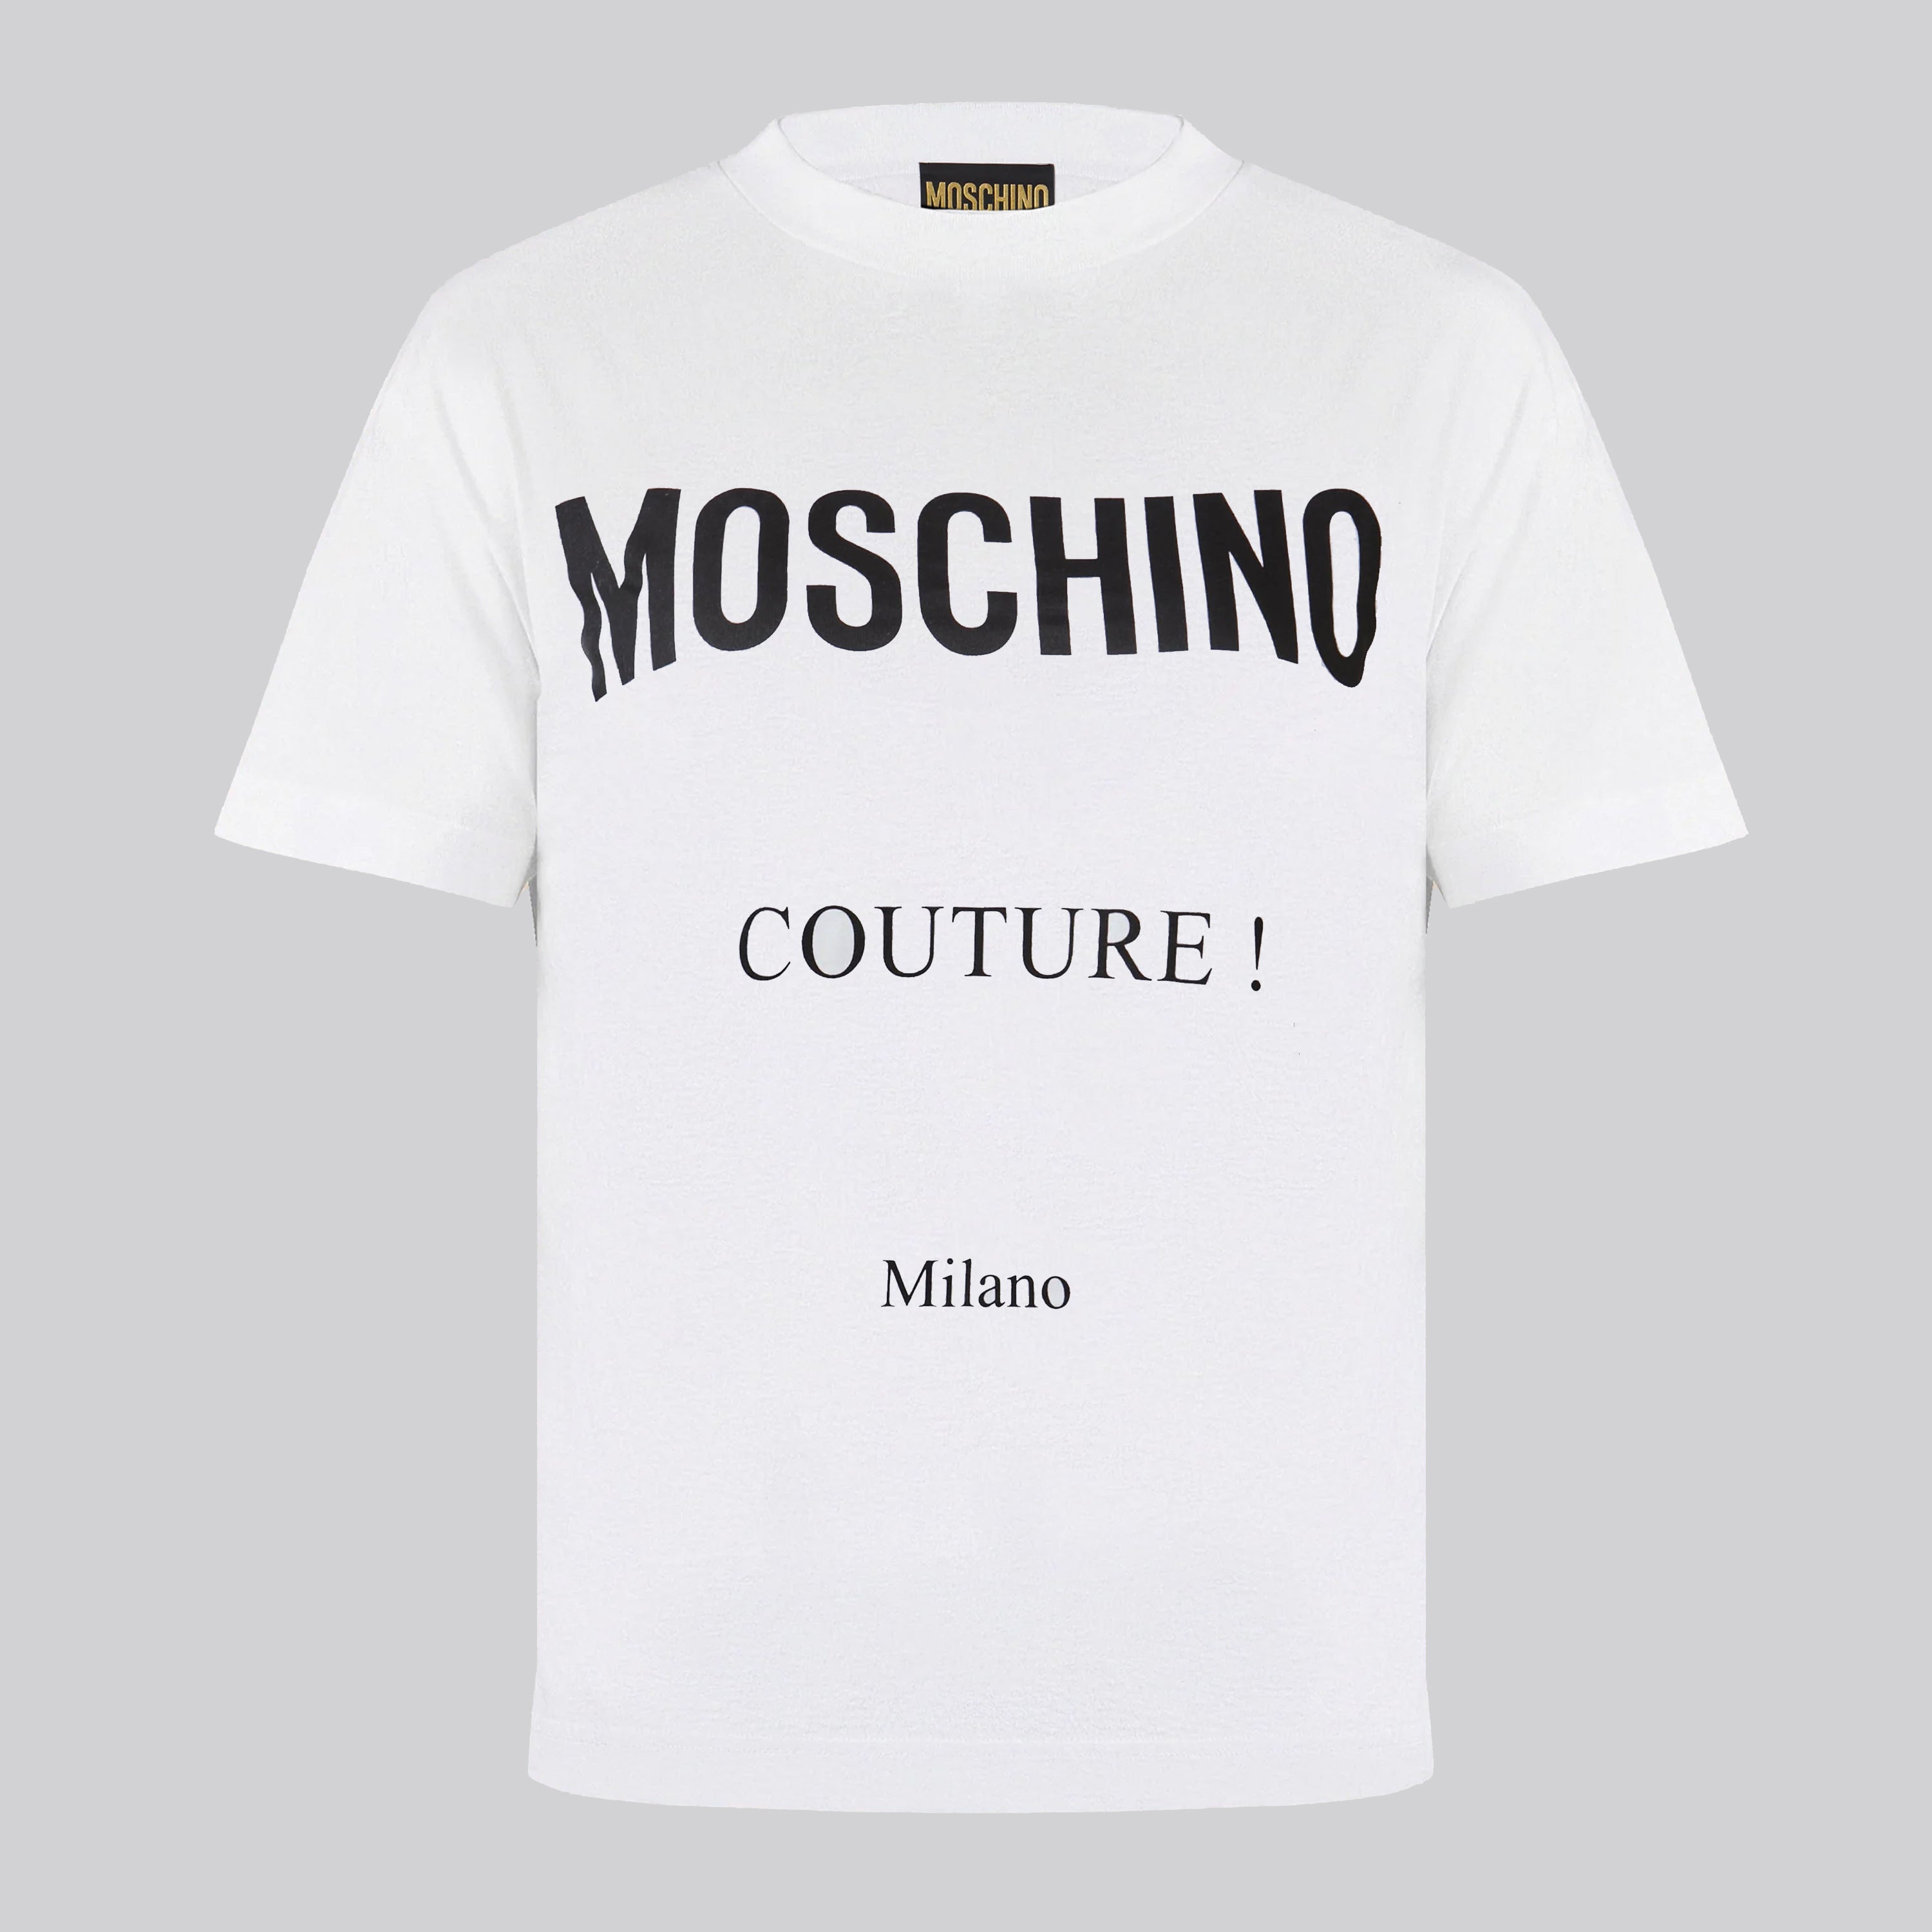 Camiseta Blanca Moschino Couture !